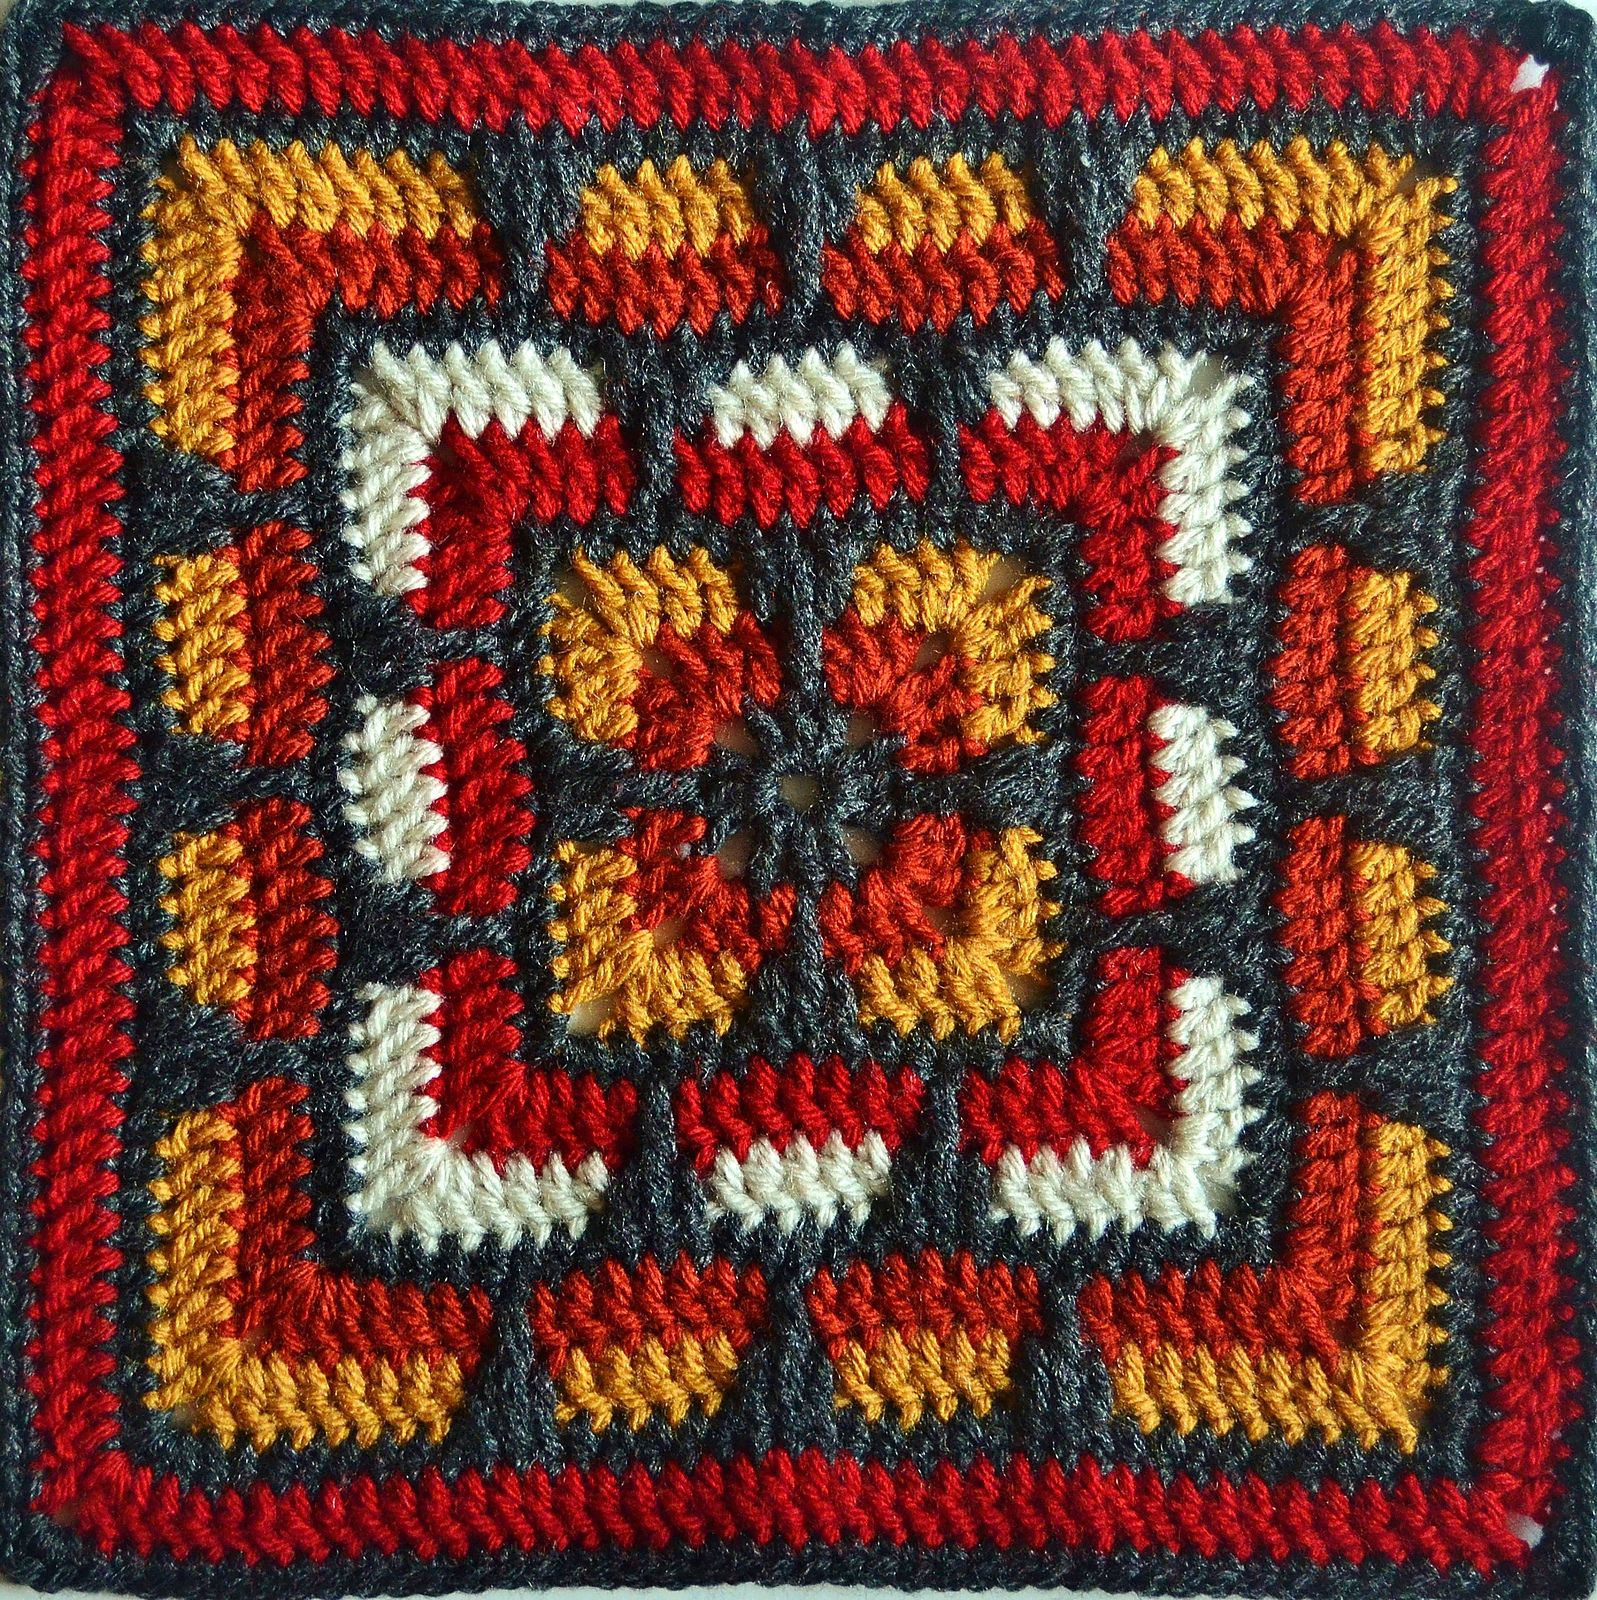 12 Granny Square Crochet Pattern Larksfoot Inspired 12 Granny Square Pattern From Home Crochet